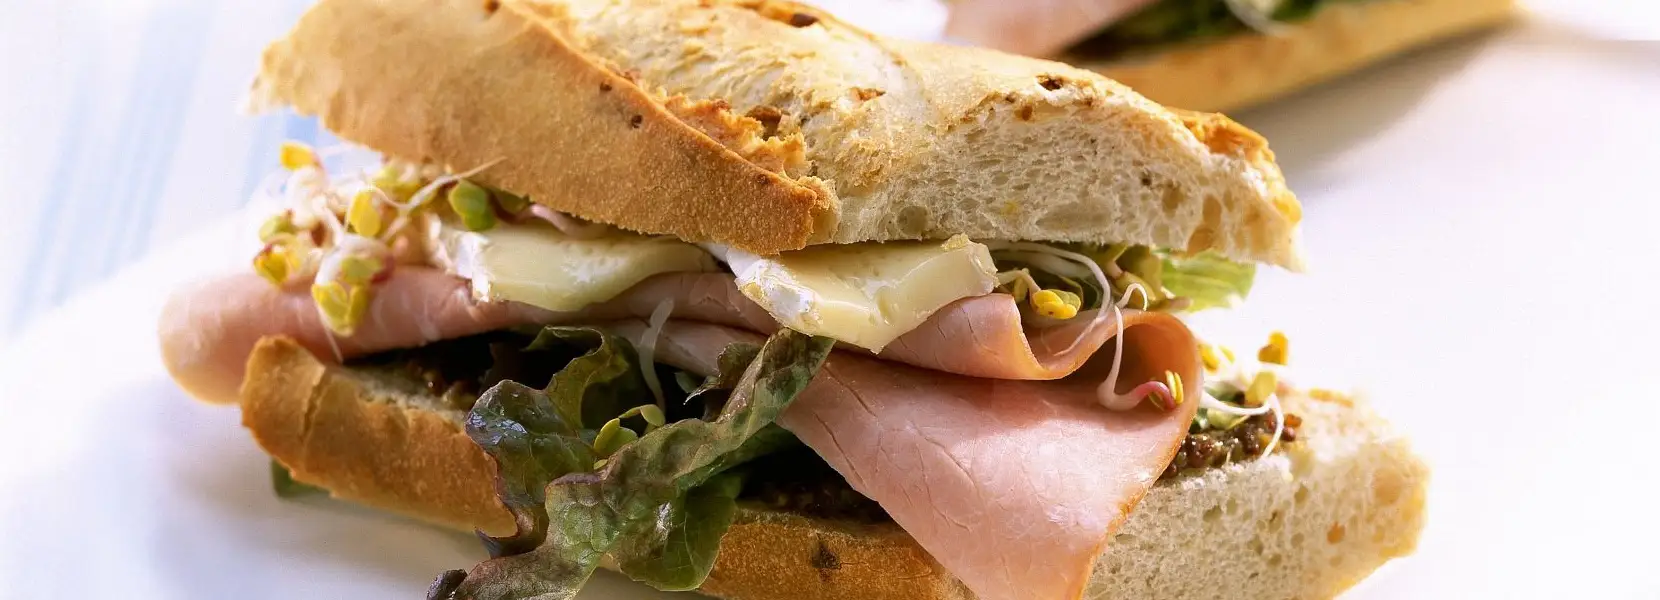 Sandwich Menu  | Food at Broadway - Carlisle Sandwich shop